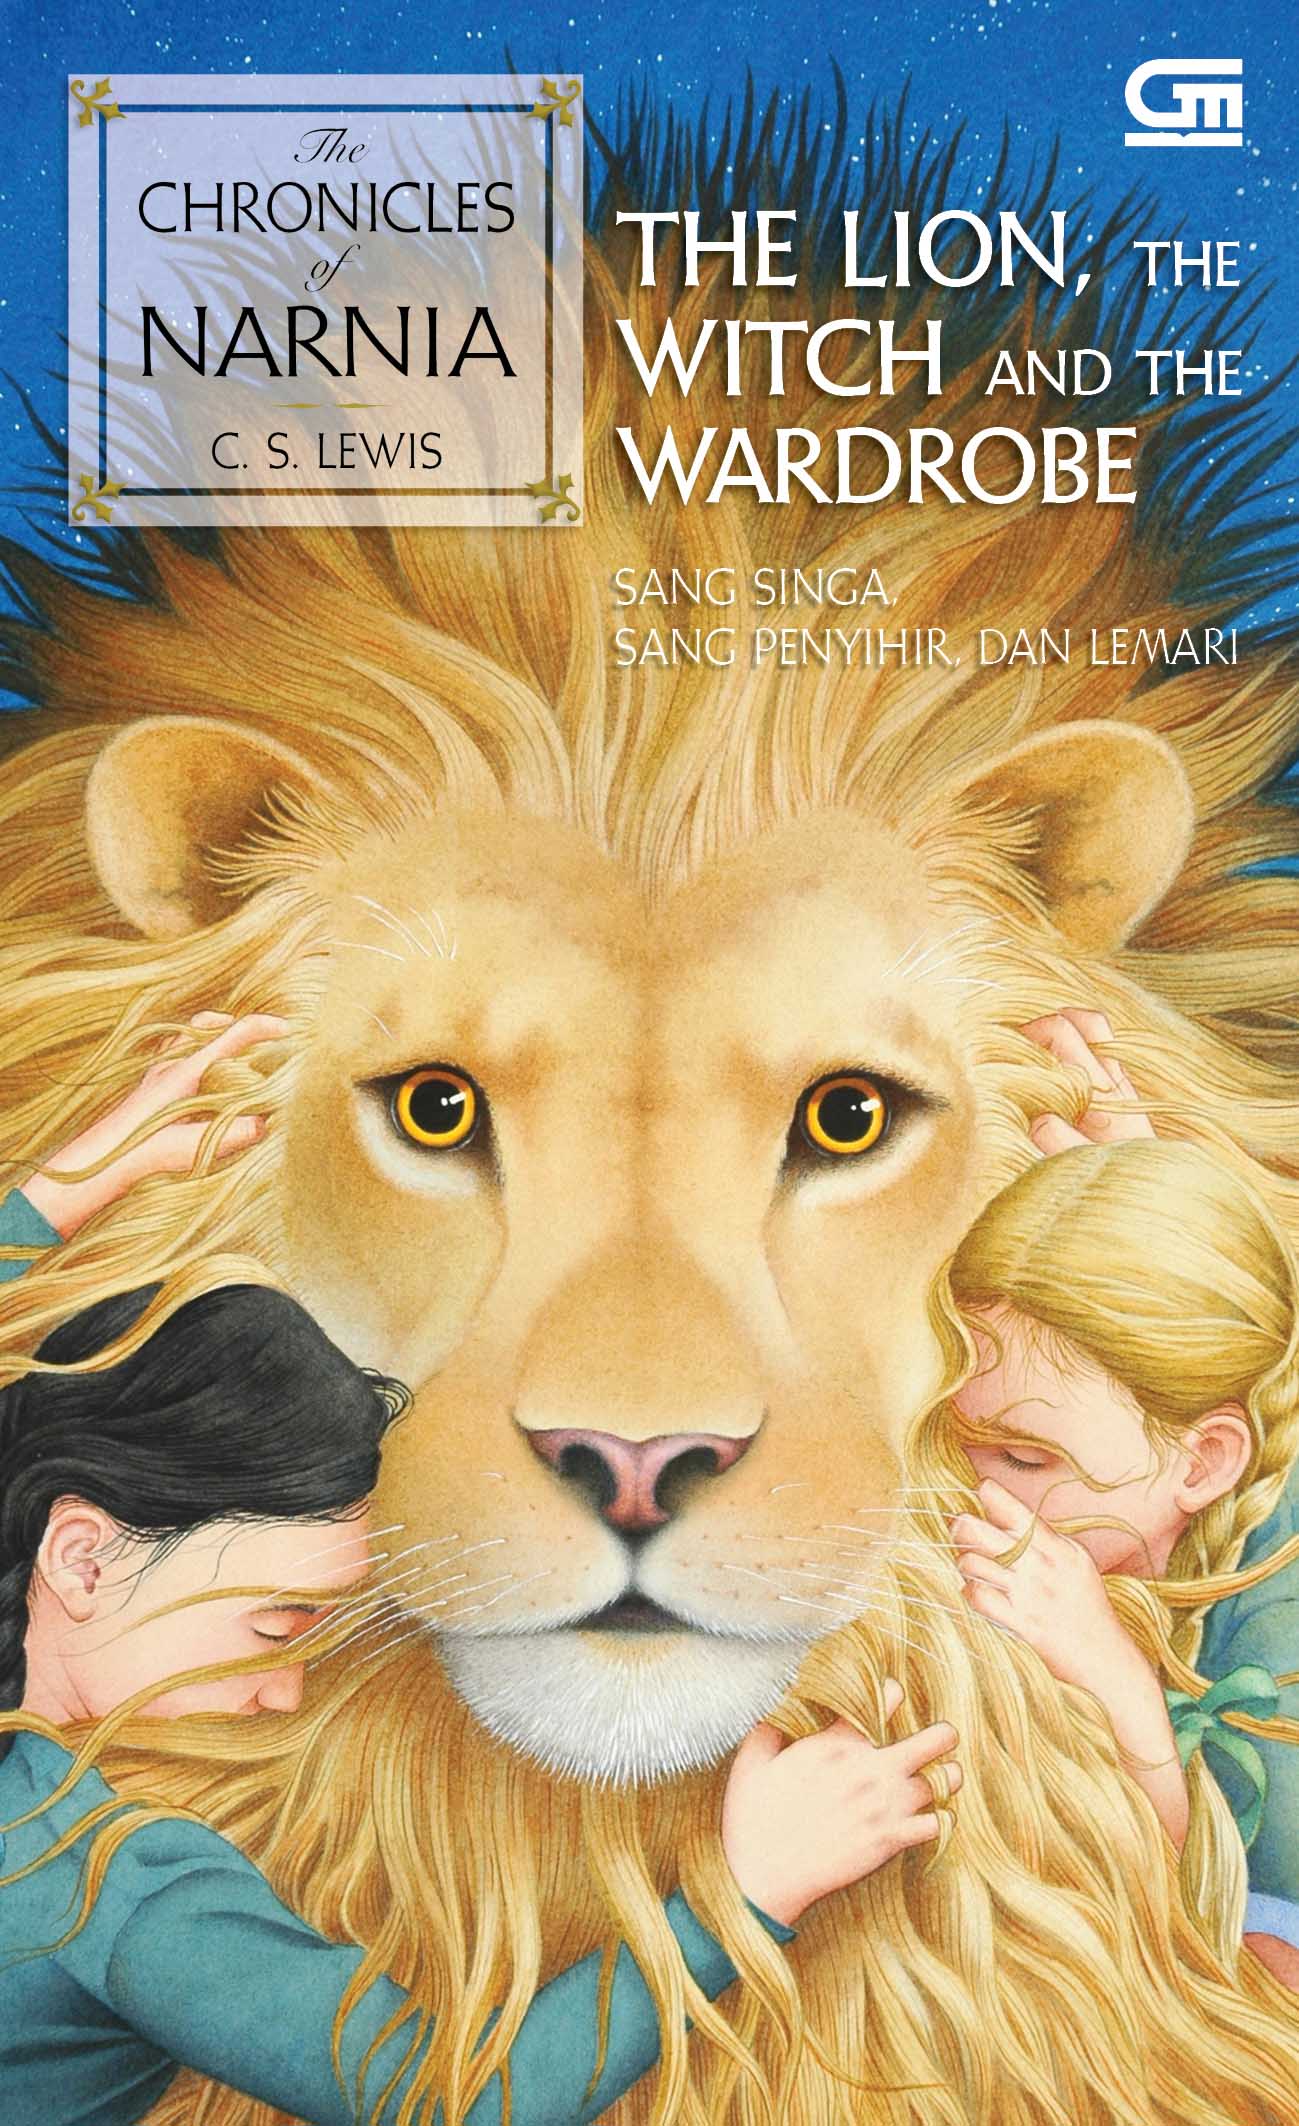 The Chronicles of Narnia #2: The Lion, the Witch and the Wardrobe (Sang Singa, Sang Penyihir dan Lemari)